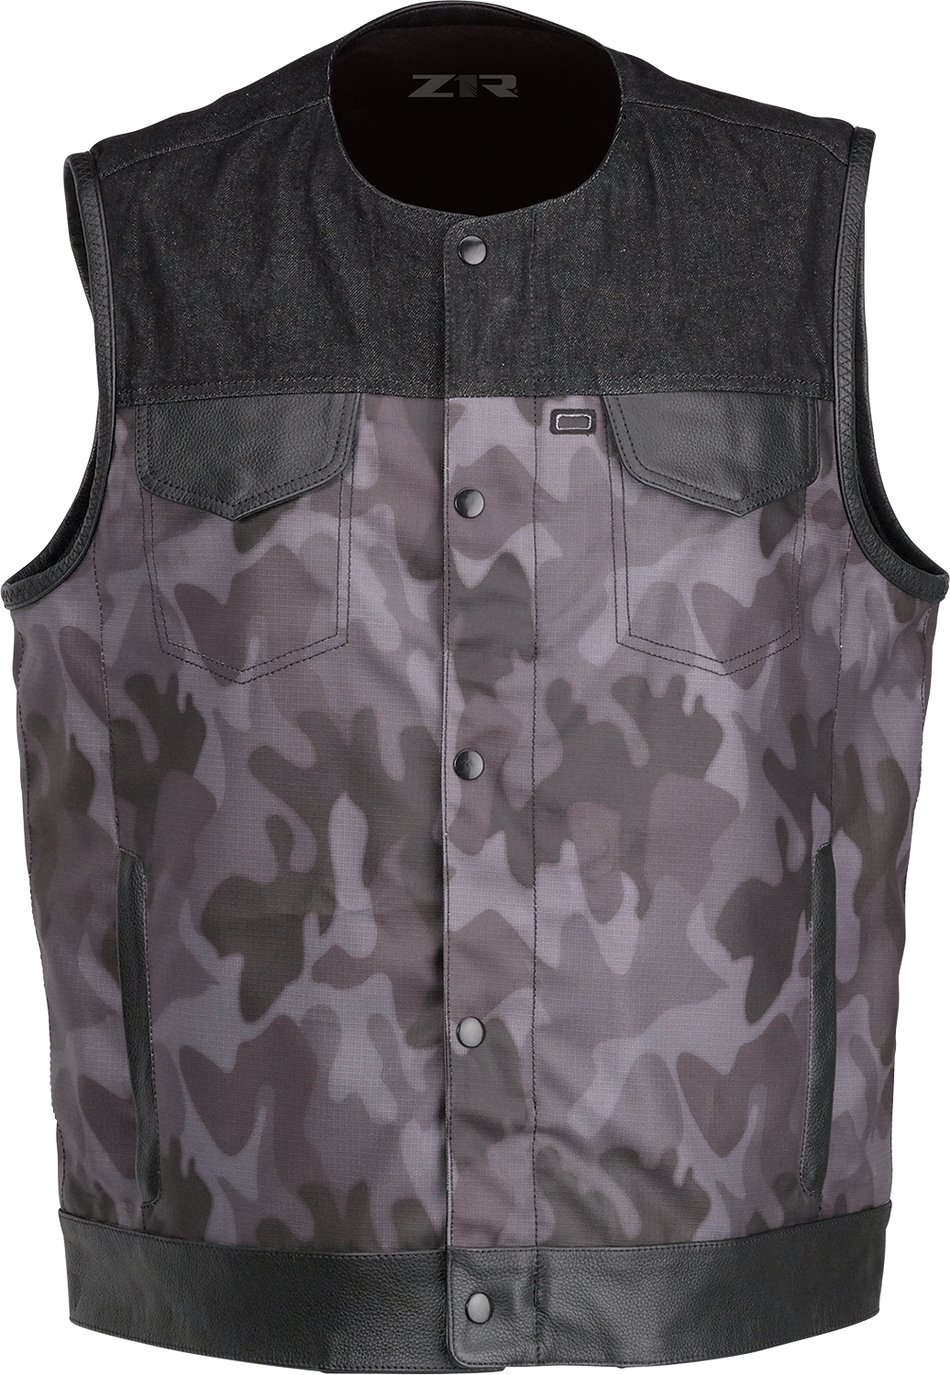 Z1R Nightfire Camo Vest - Black/Gray - 5XL 2830-0631